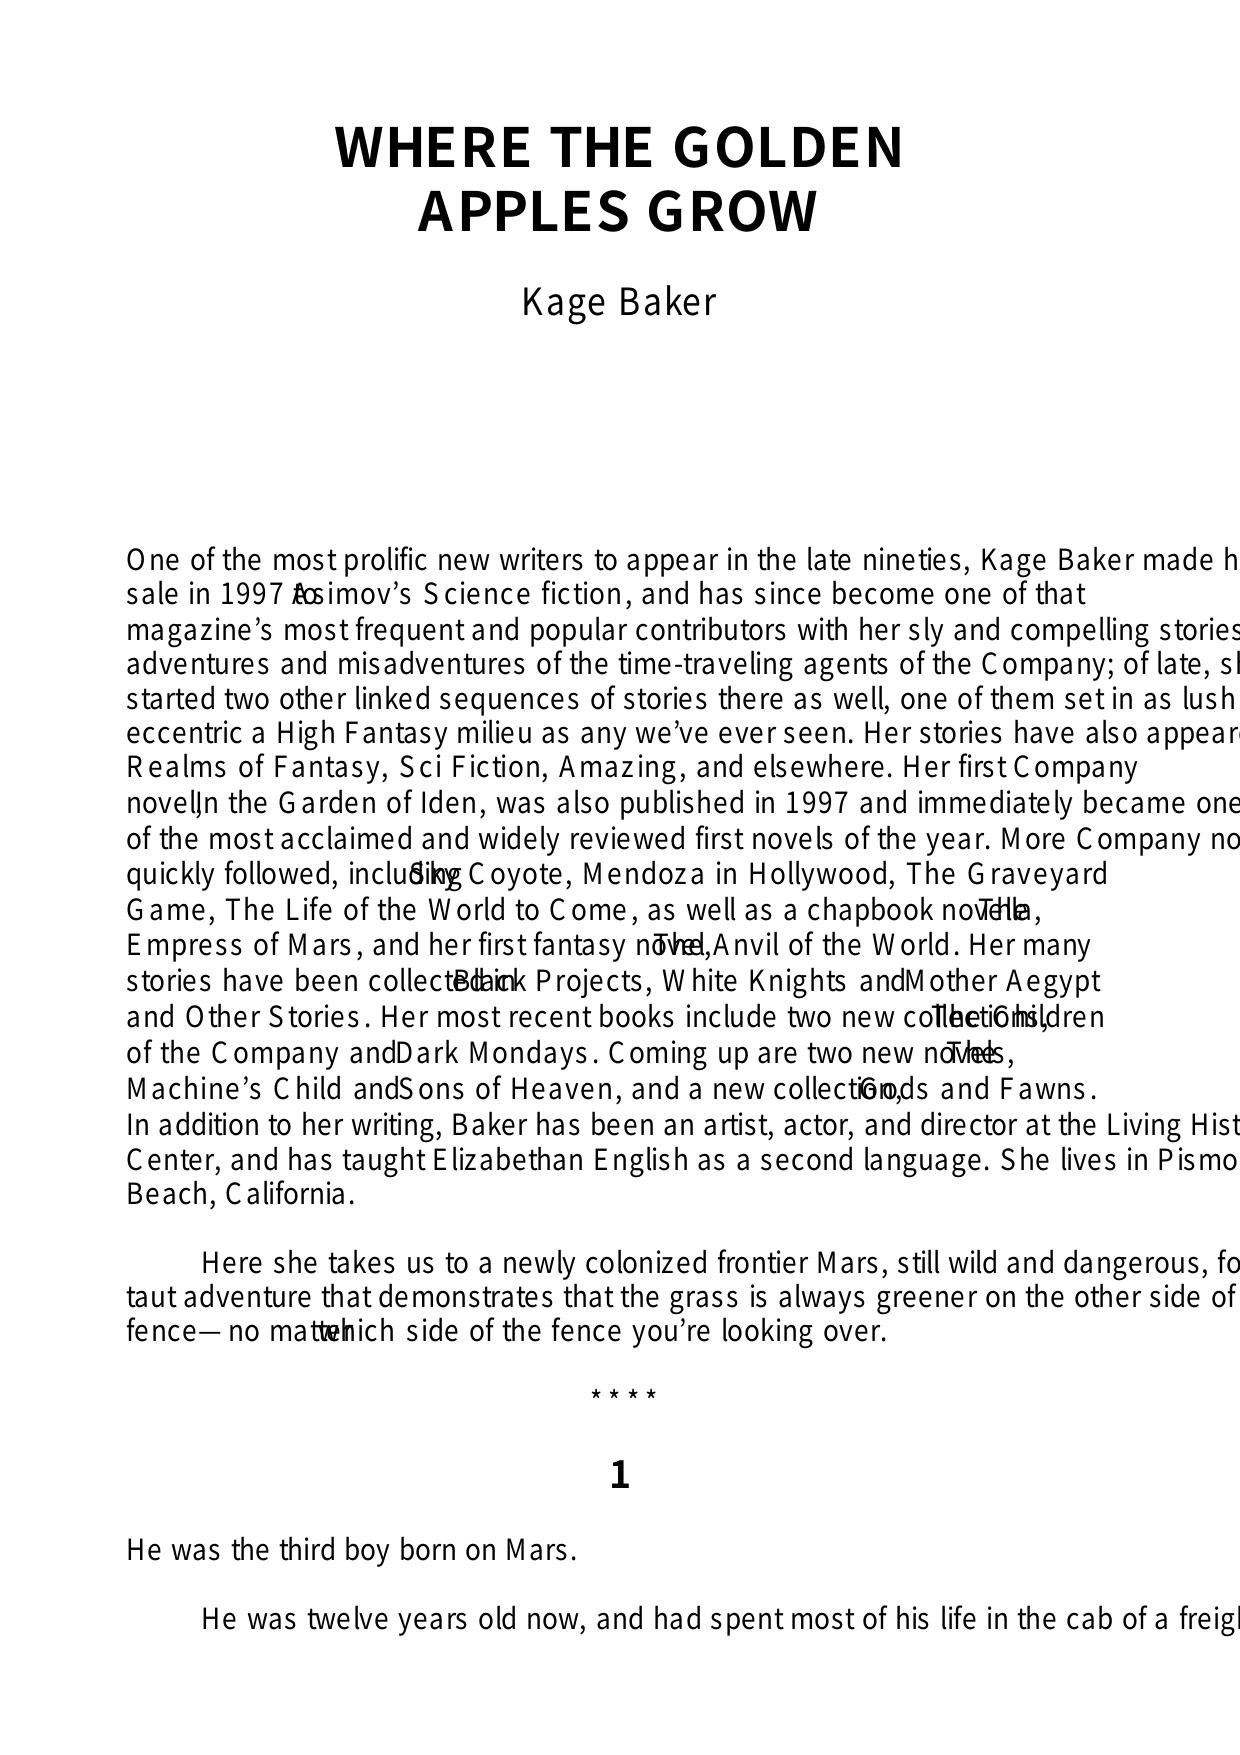 Baker, Kage - Where the Golden Apples Grow by Baker Kage